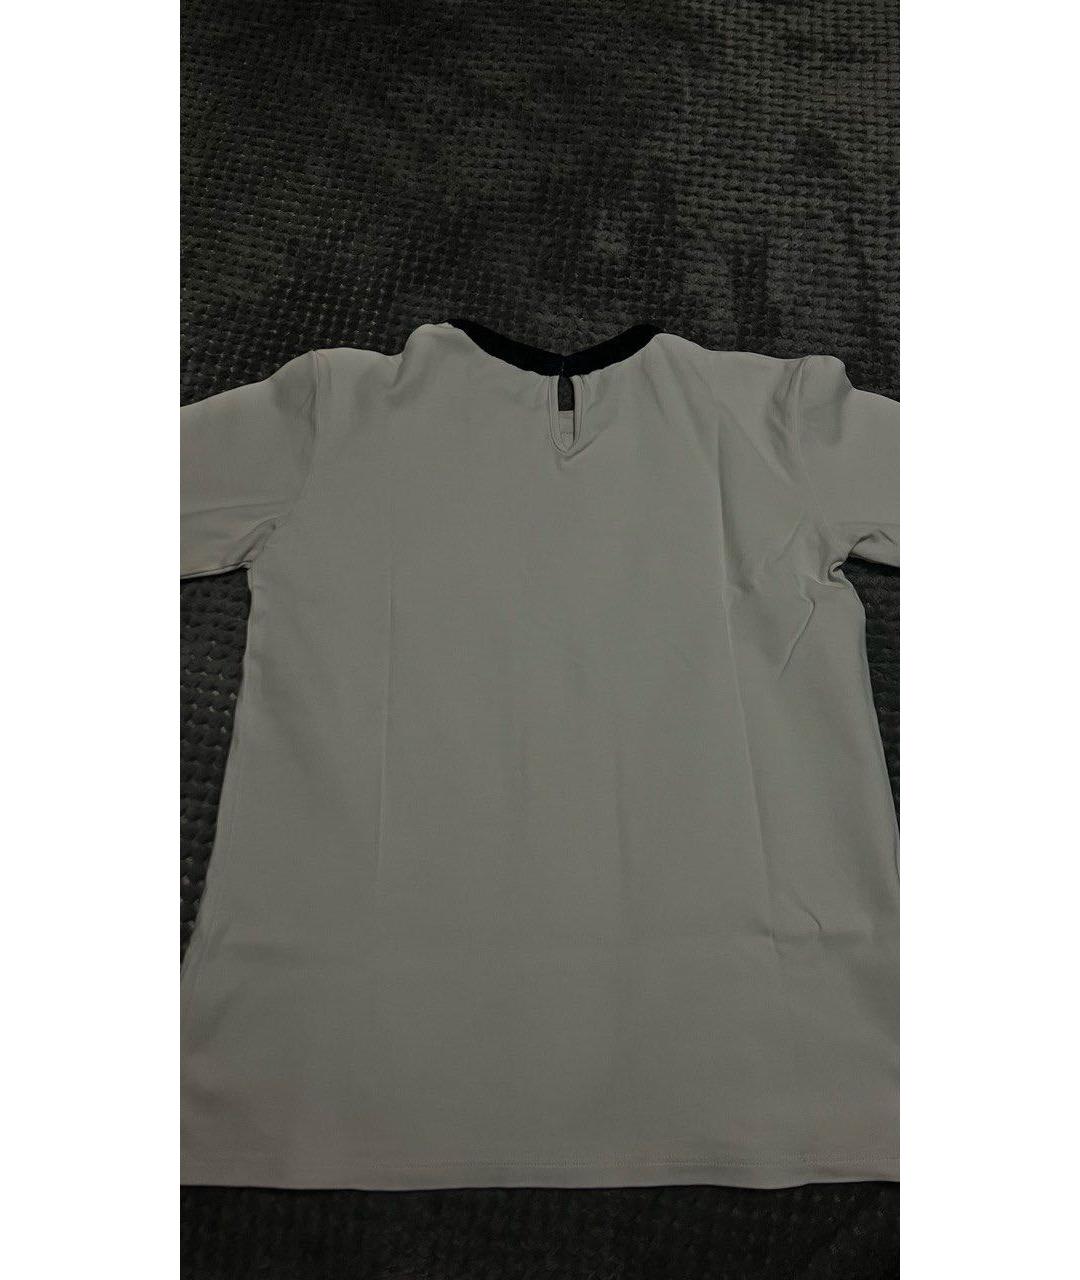 CHANEL PRE-OWNED Белая хлопковая футболка, фото 3